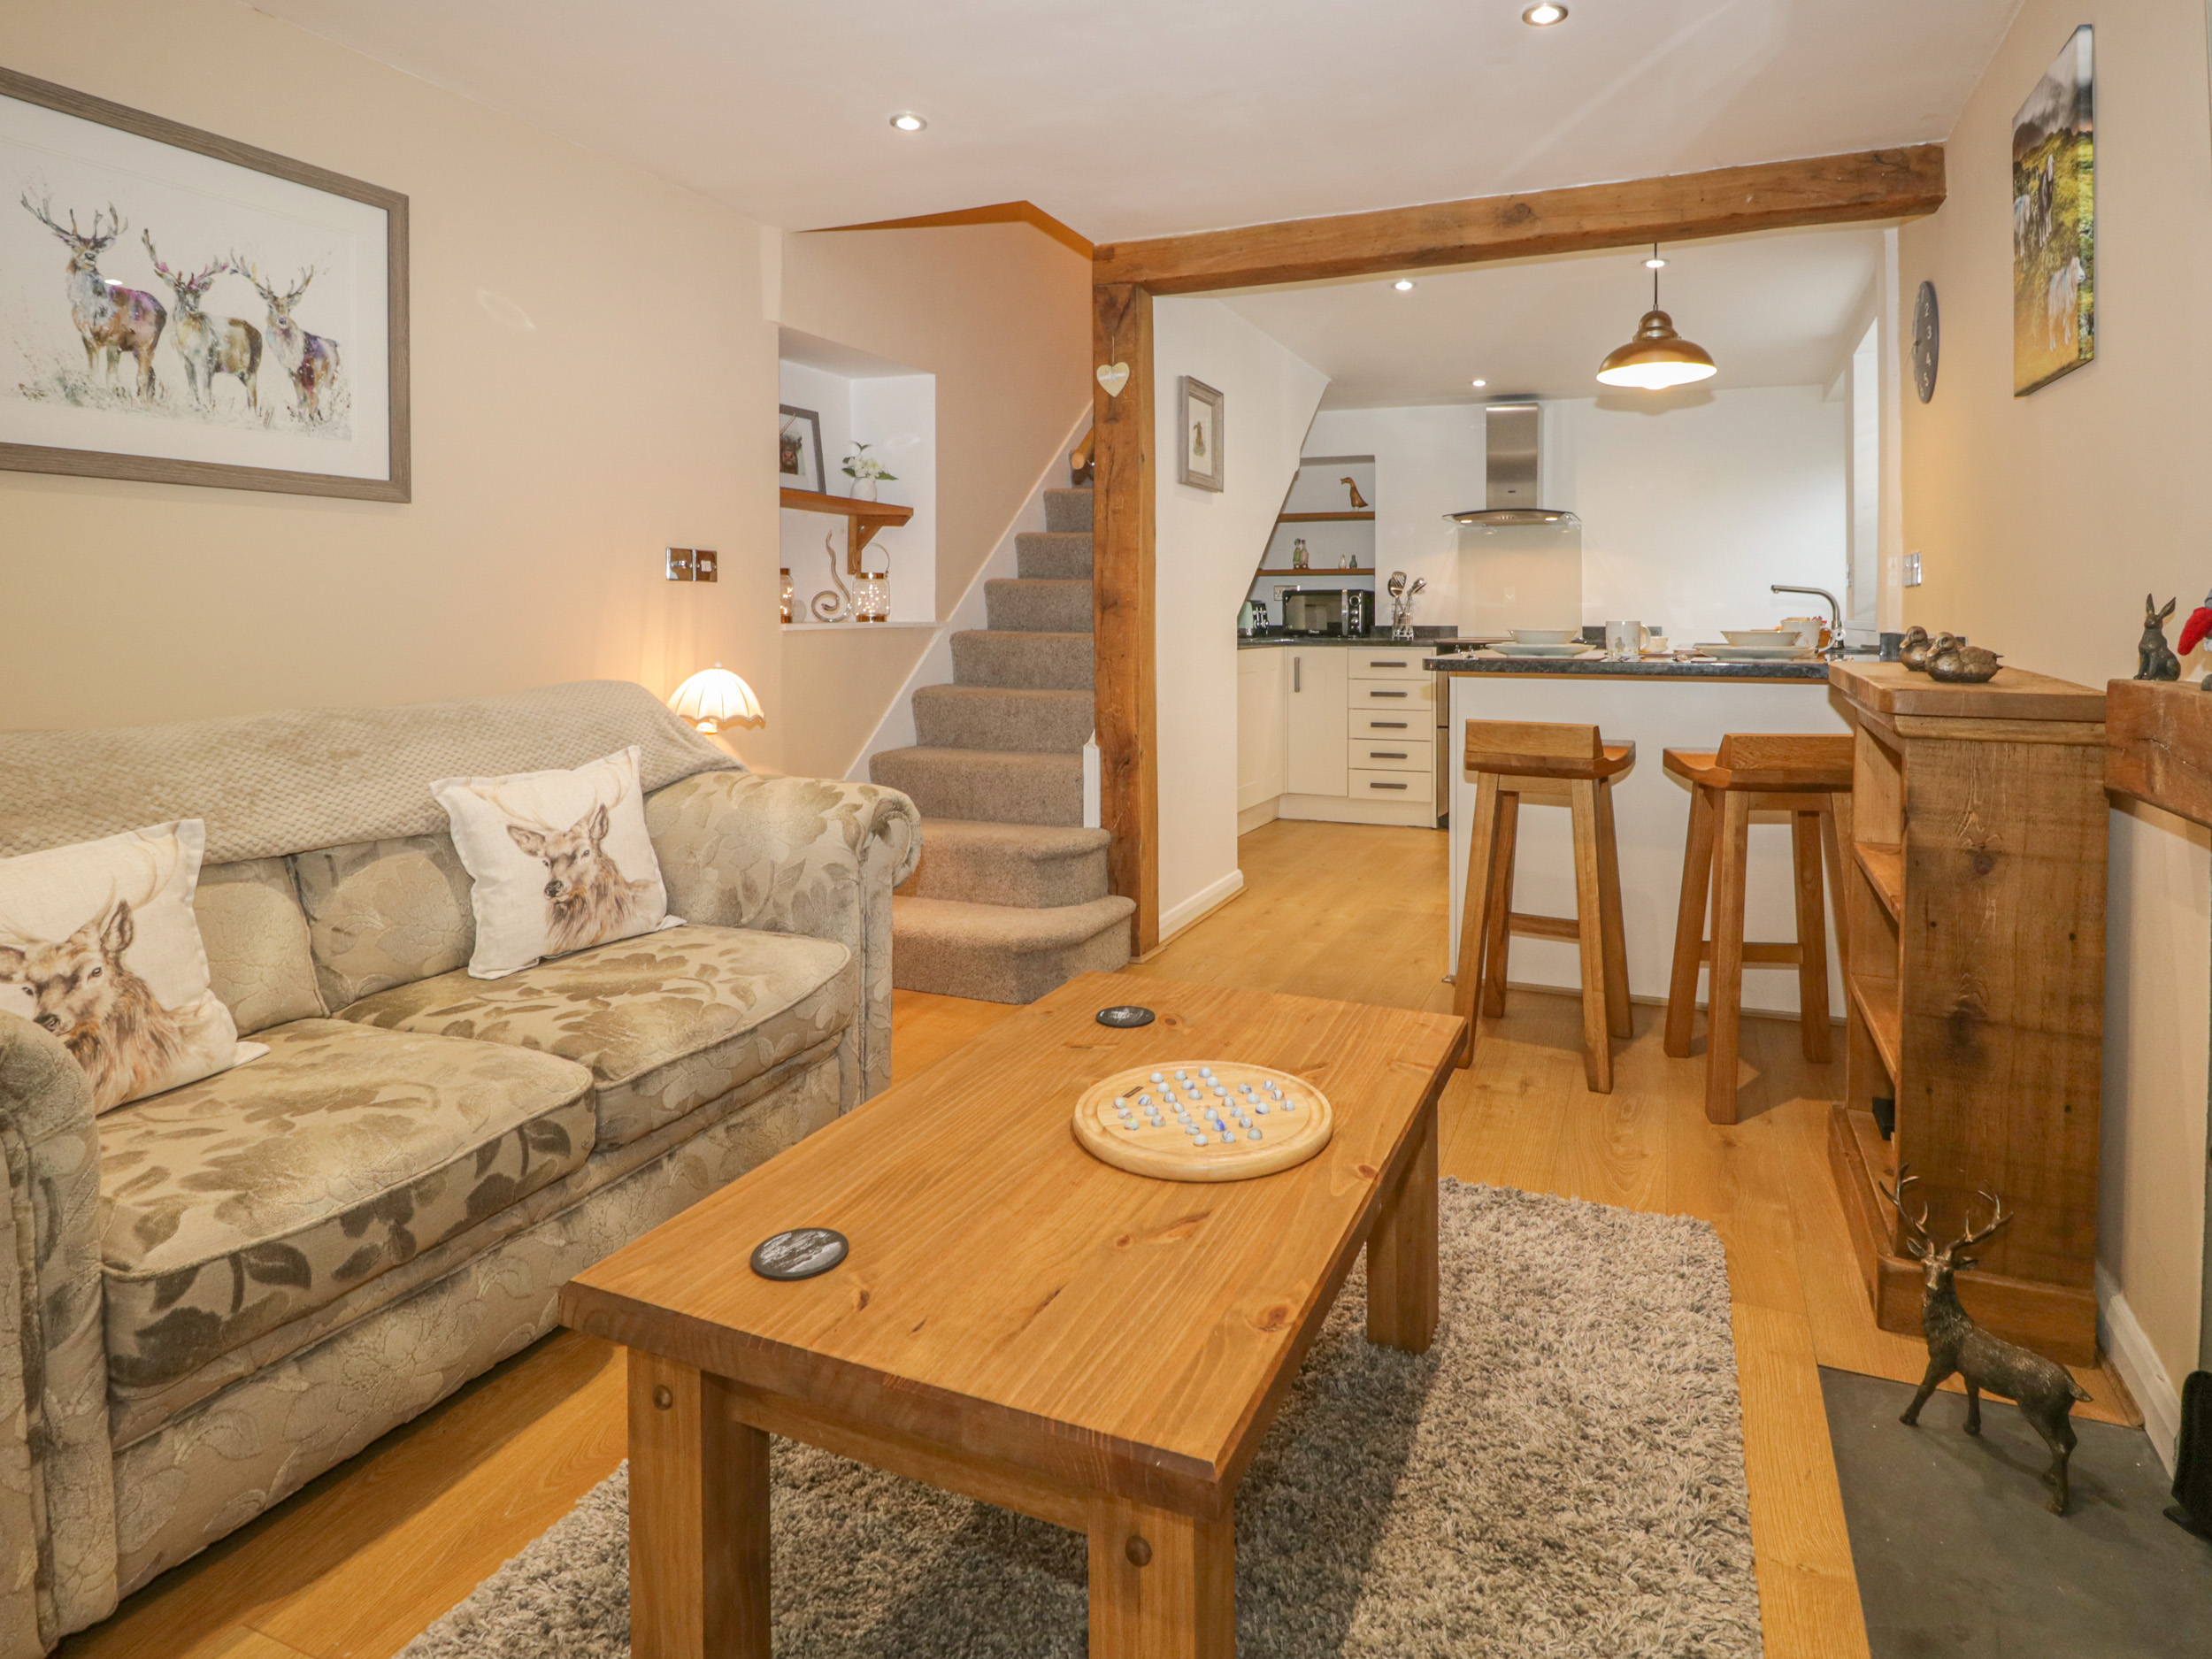 1 bedroom Cottage for rent in Newby Bridge